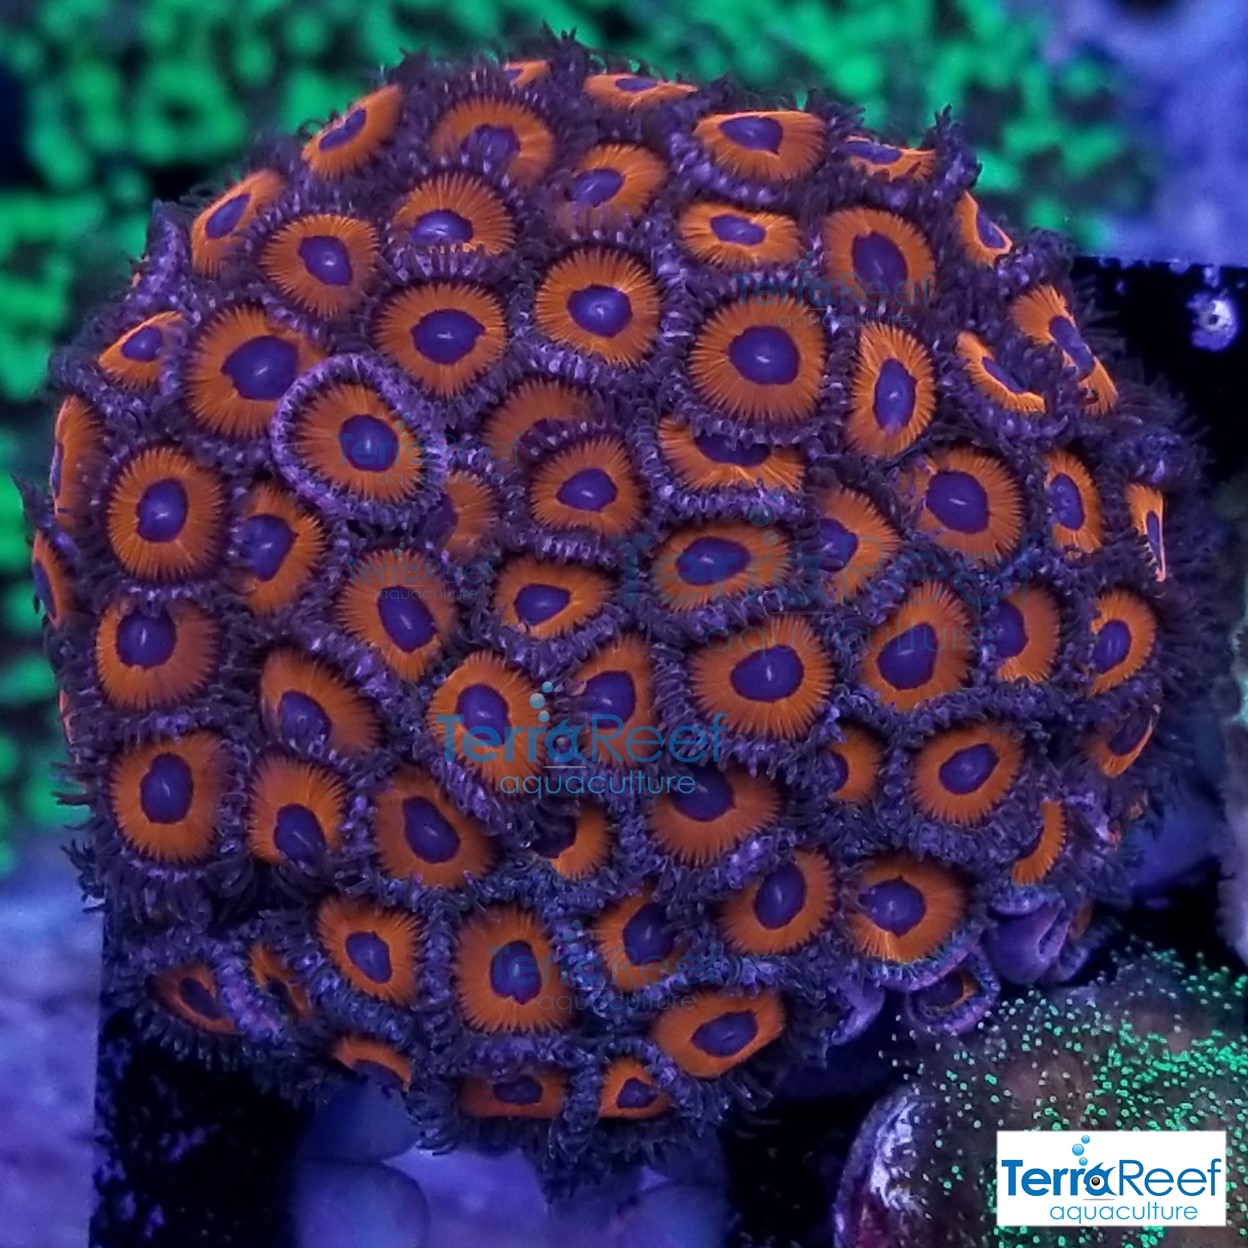 Red-Zoanthids-Coral-Polyps-WYSIWYG-Frag-2-20201228_211744.jpg